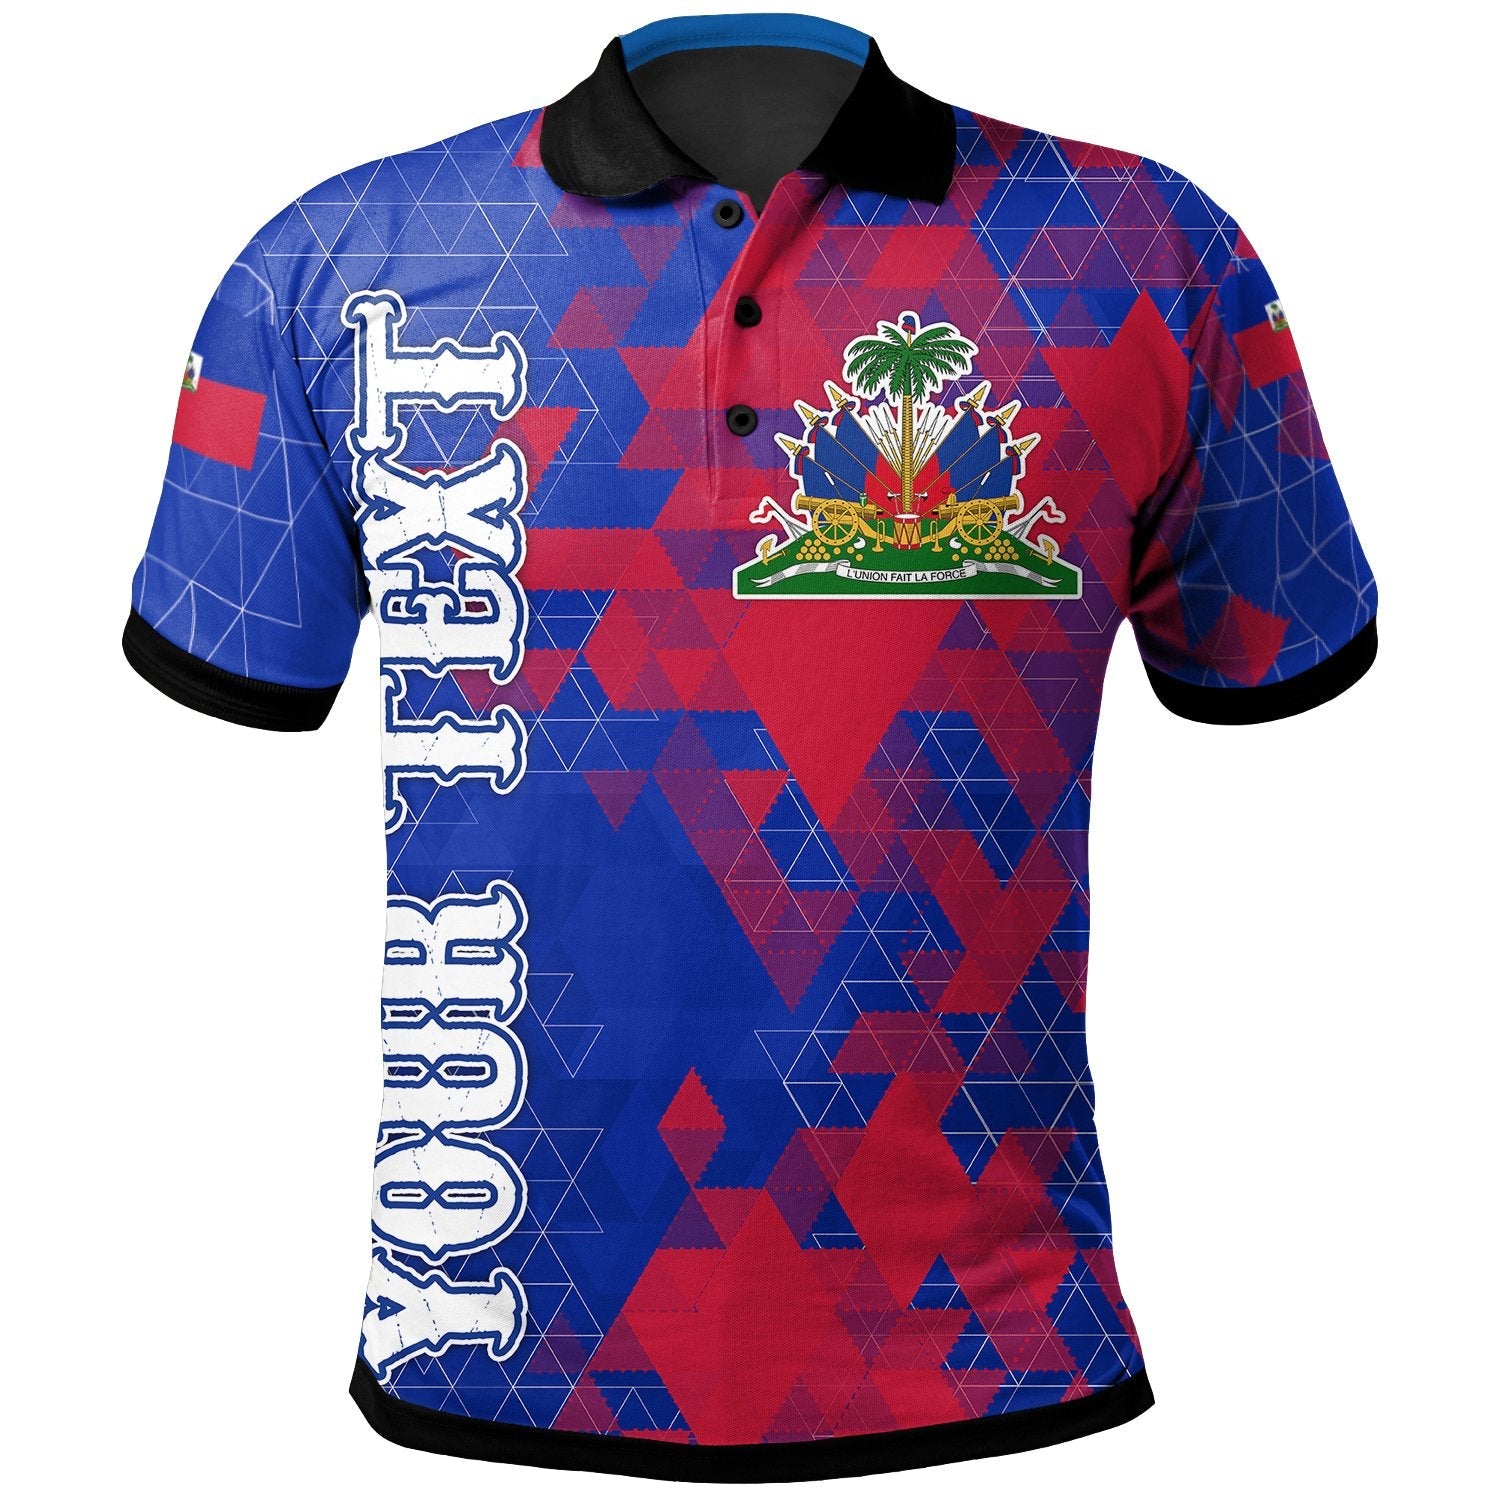 haiti-personalised-polo-shirt-national-flag-polygon-style